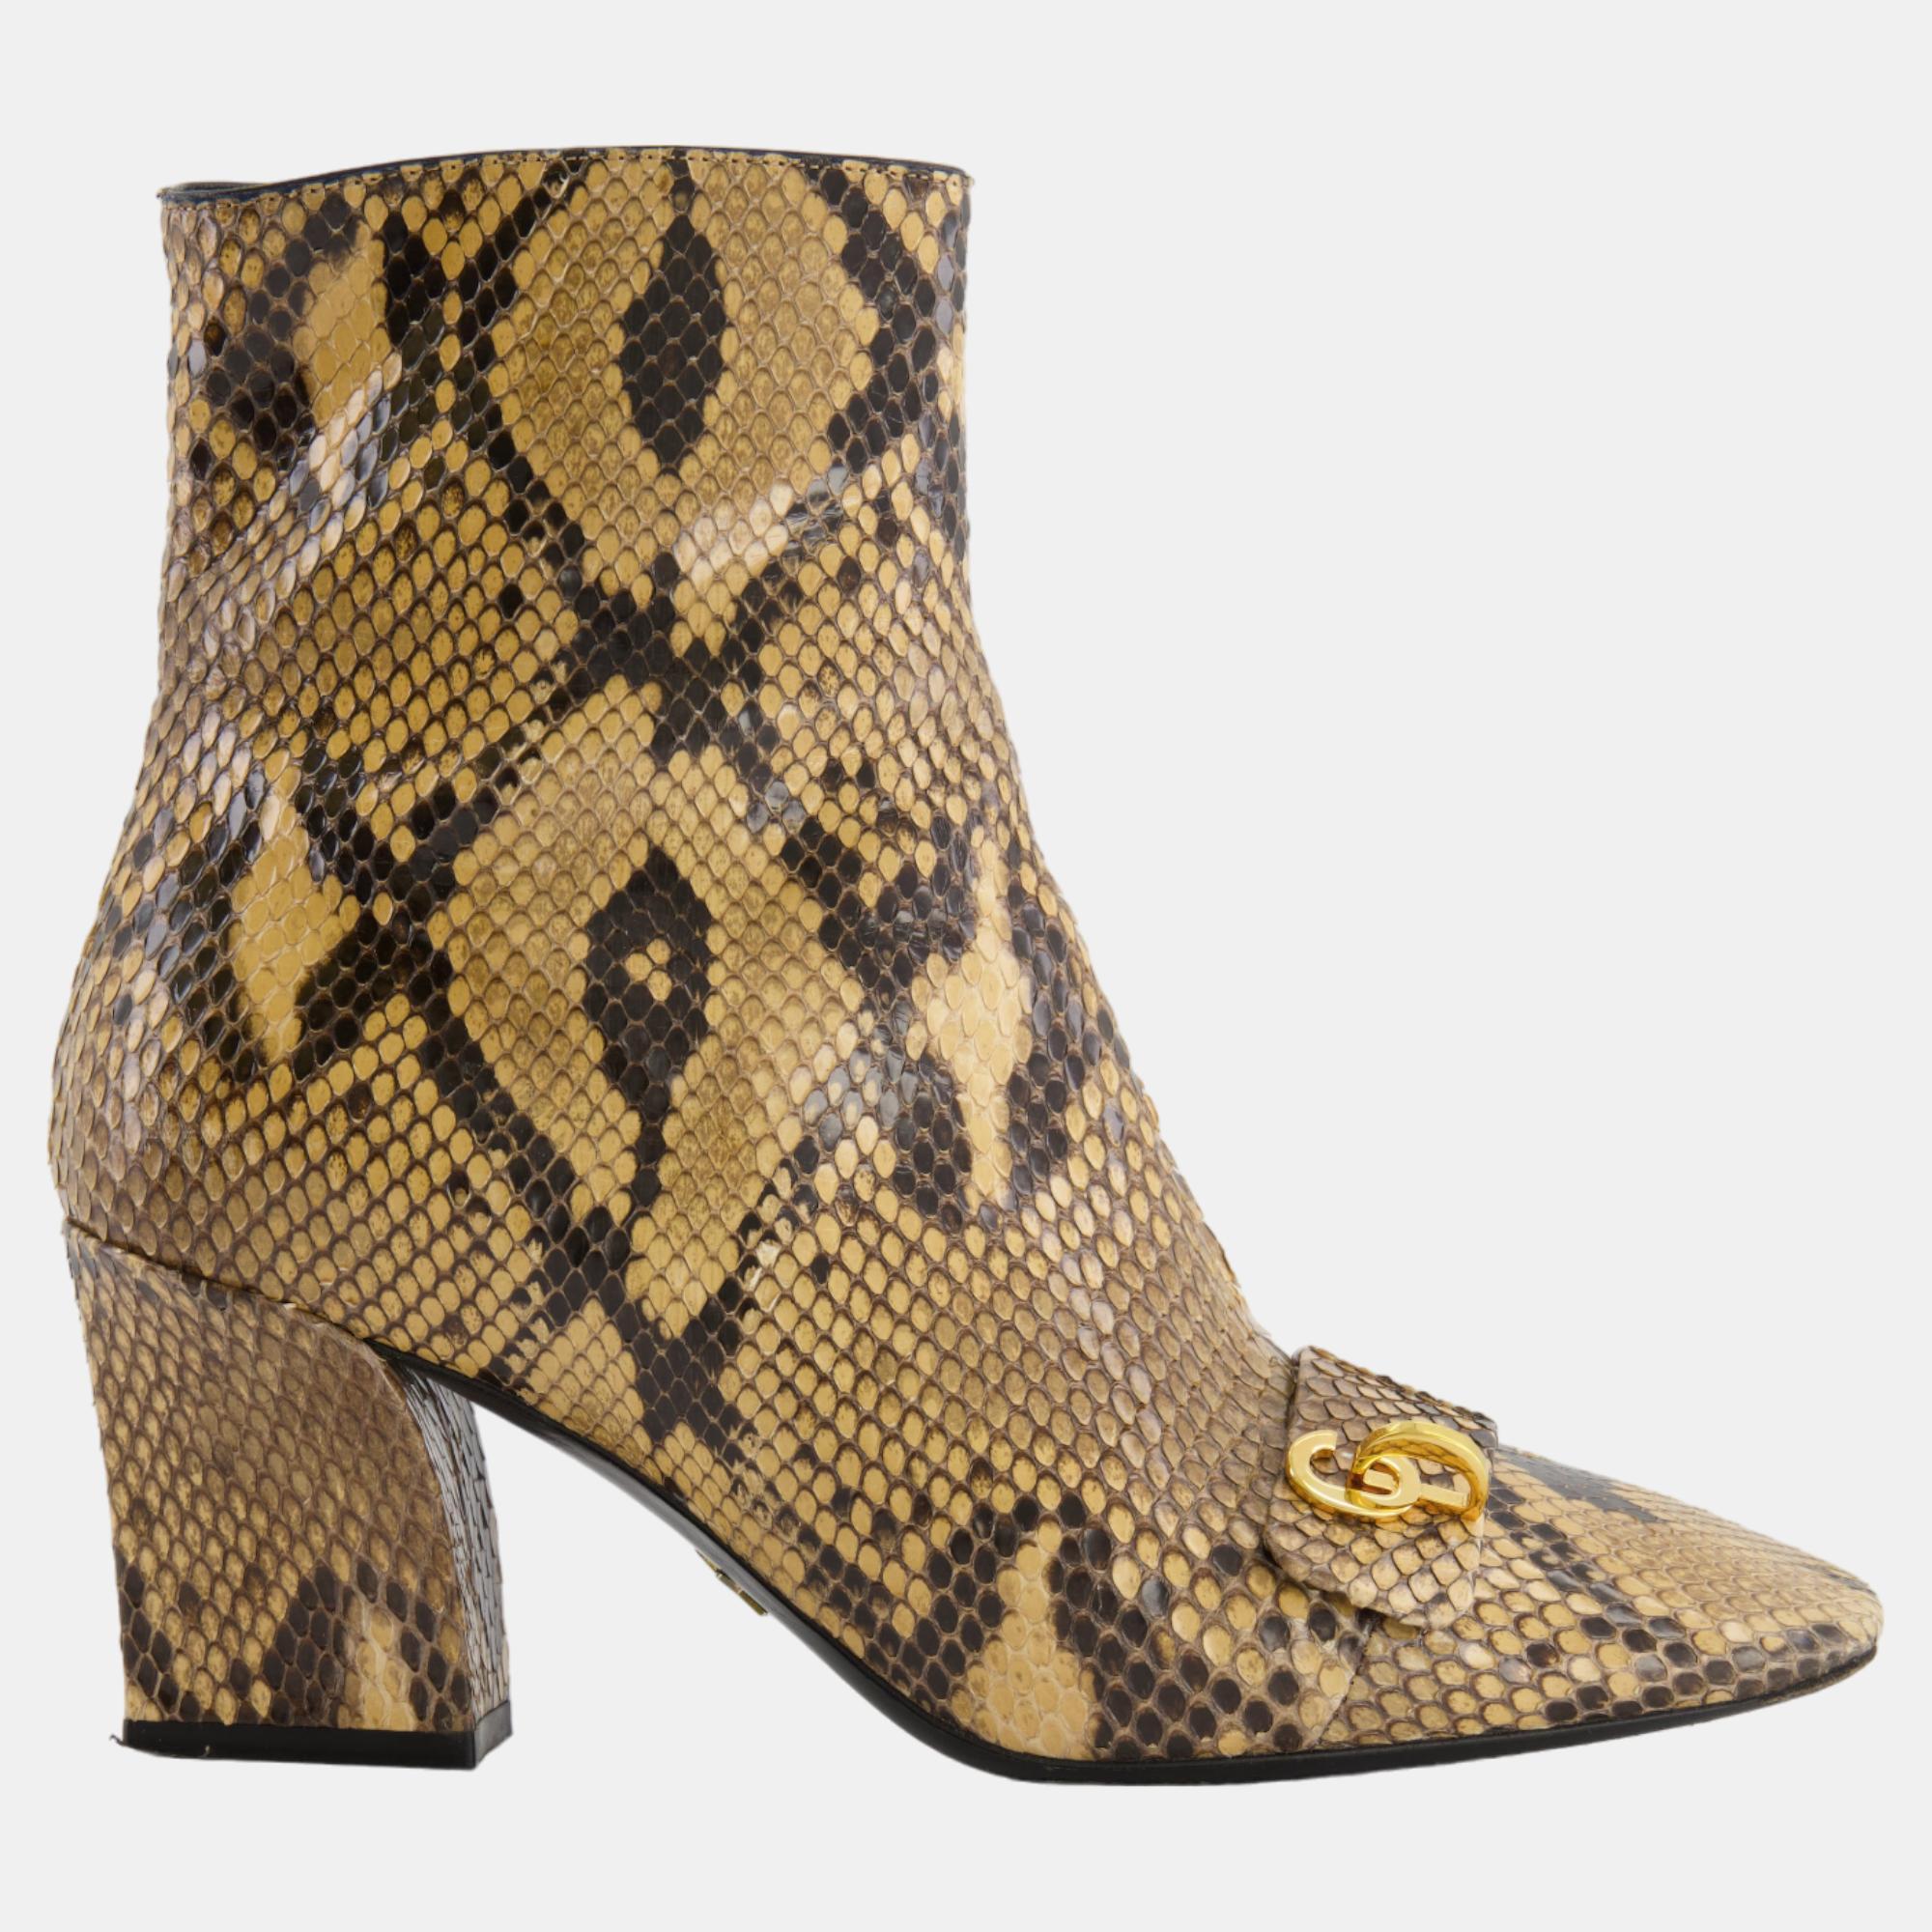 Christian dior beige python heeled boots with gold cd logo size eu 38.5